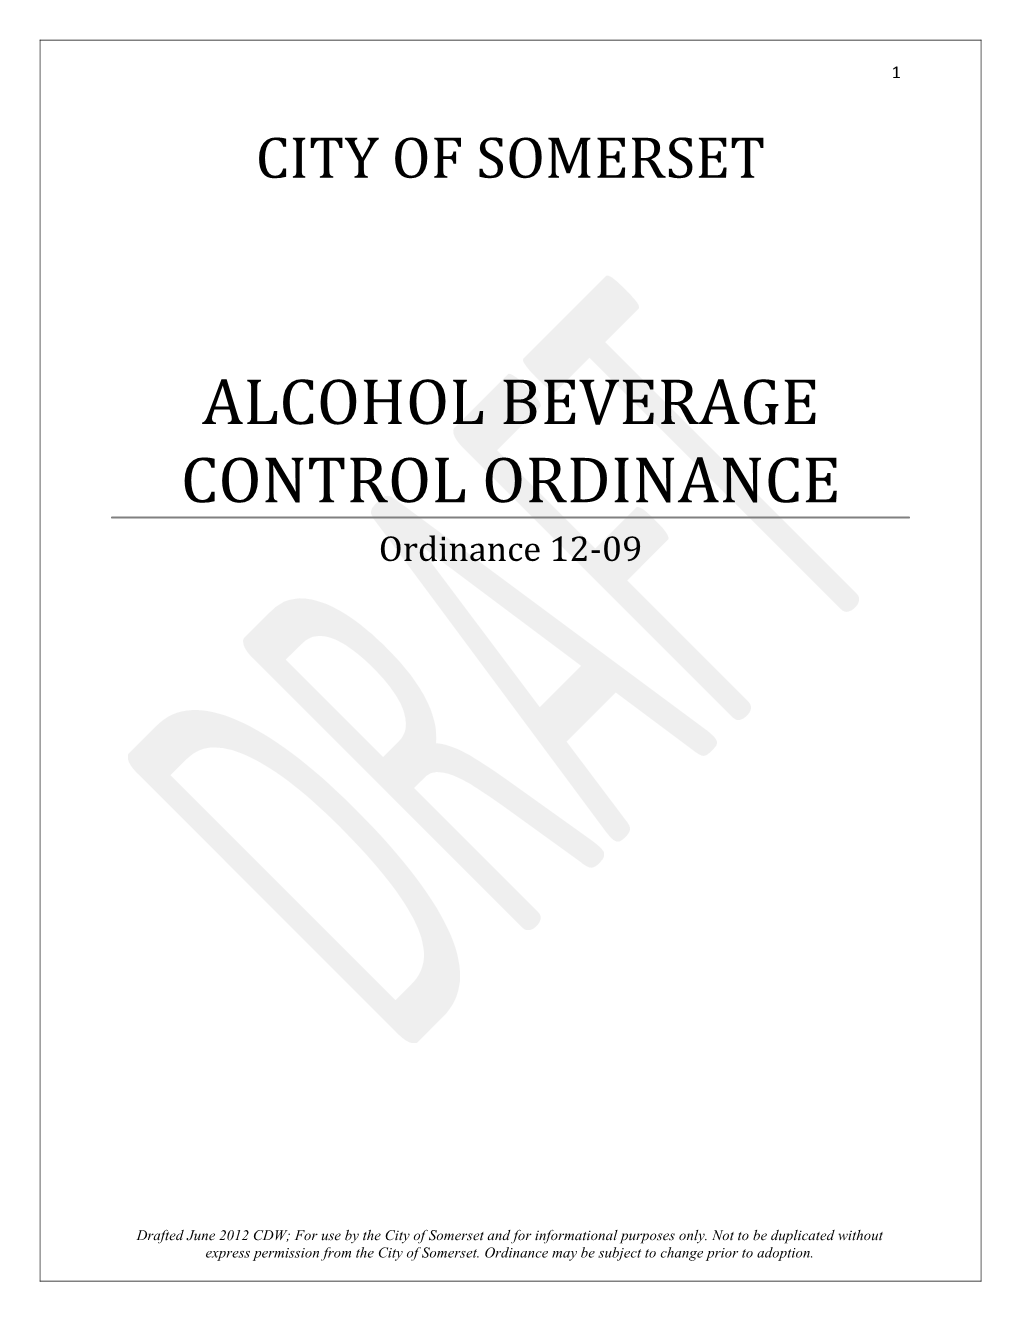 Alcohol Beverage Control Ordinance